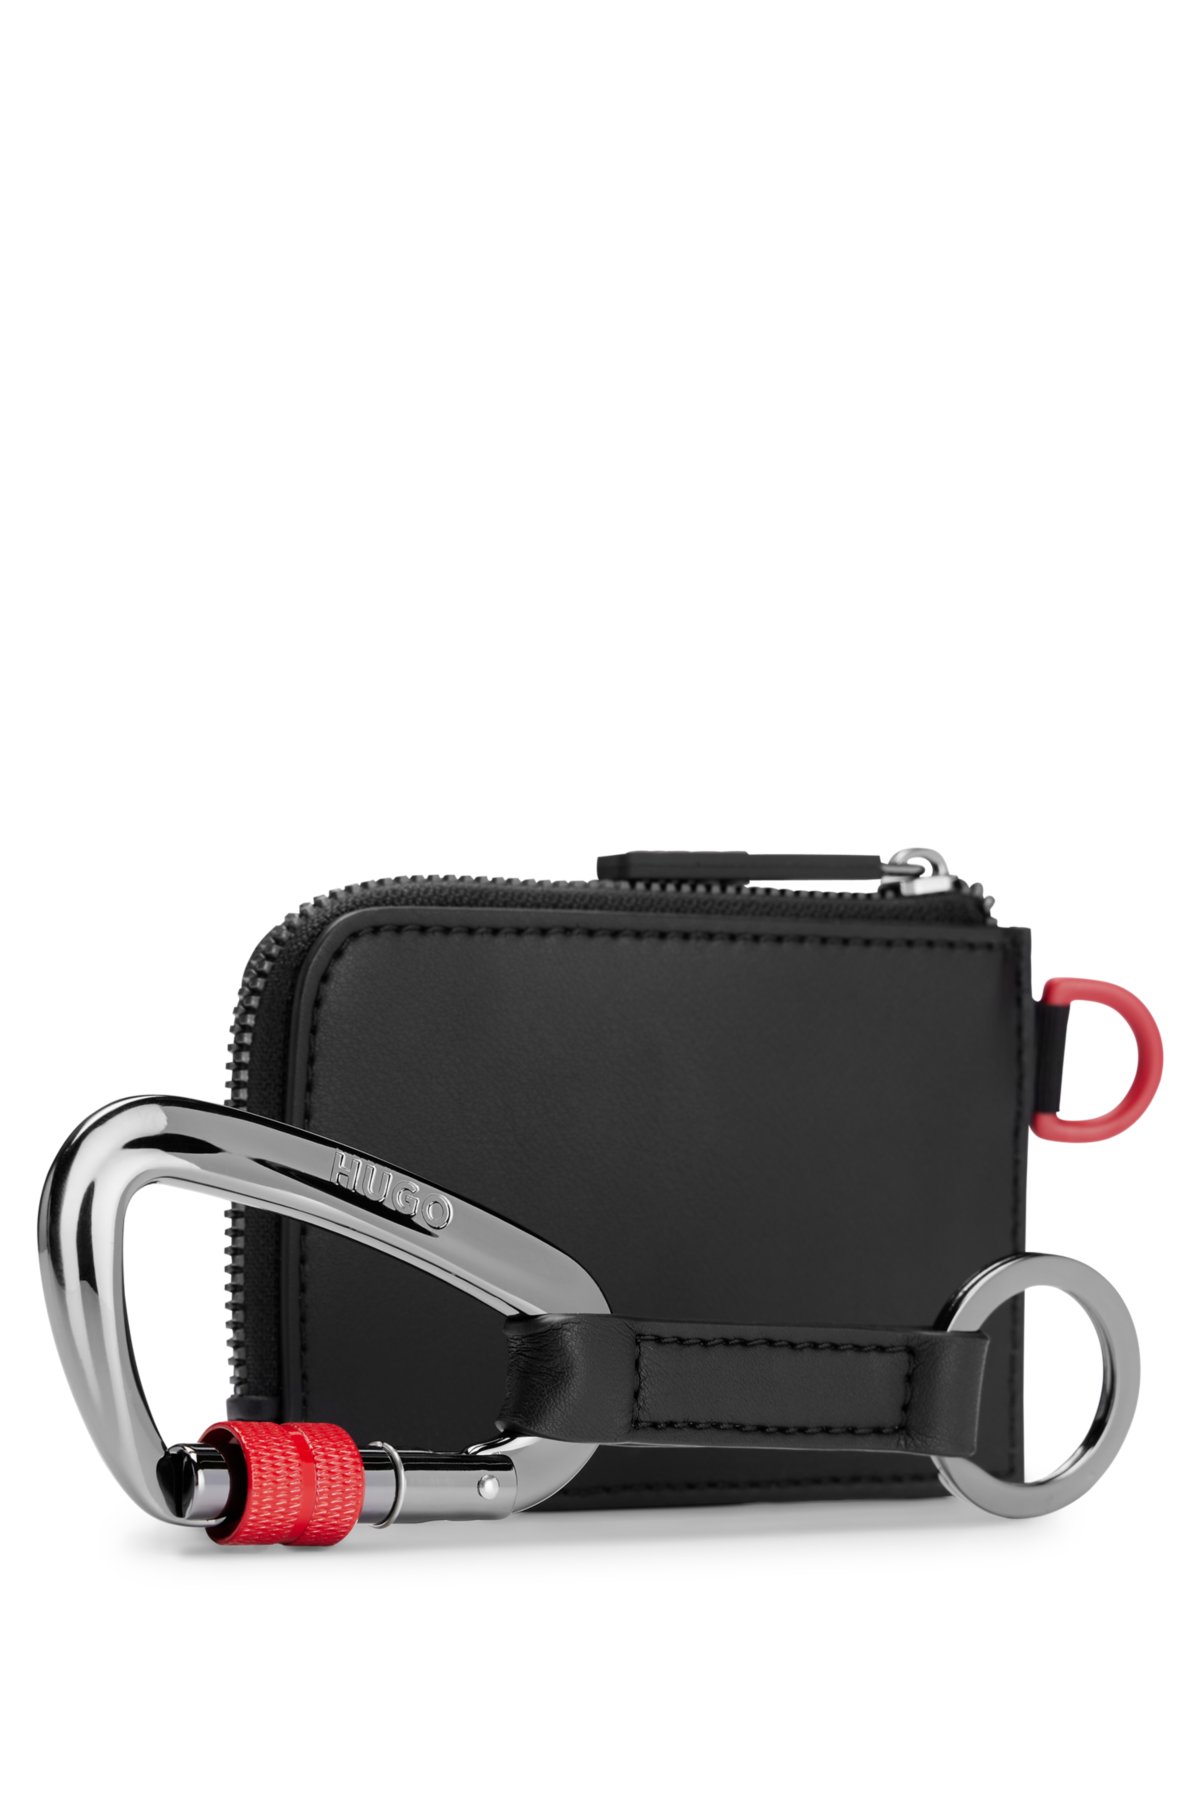 Maycom Retro Style Simple Strong Carabiner Shape Keychain Chain Ring Keyring Keyfob Key Holder Black